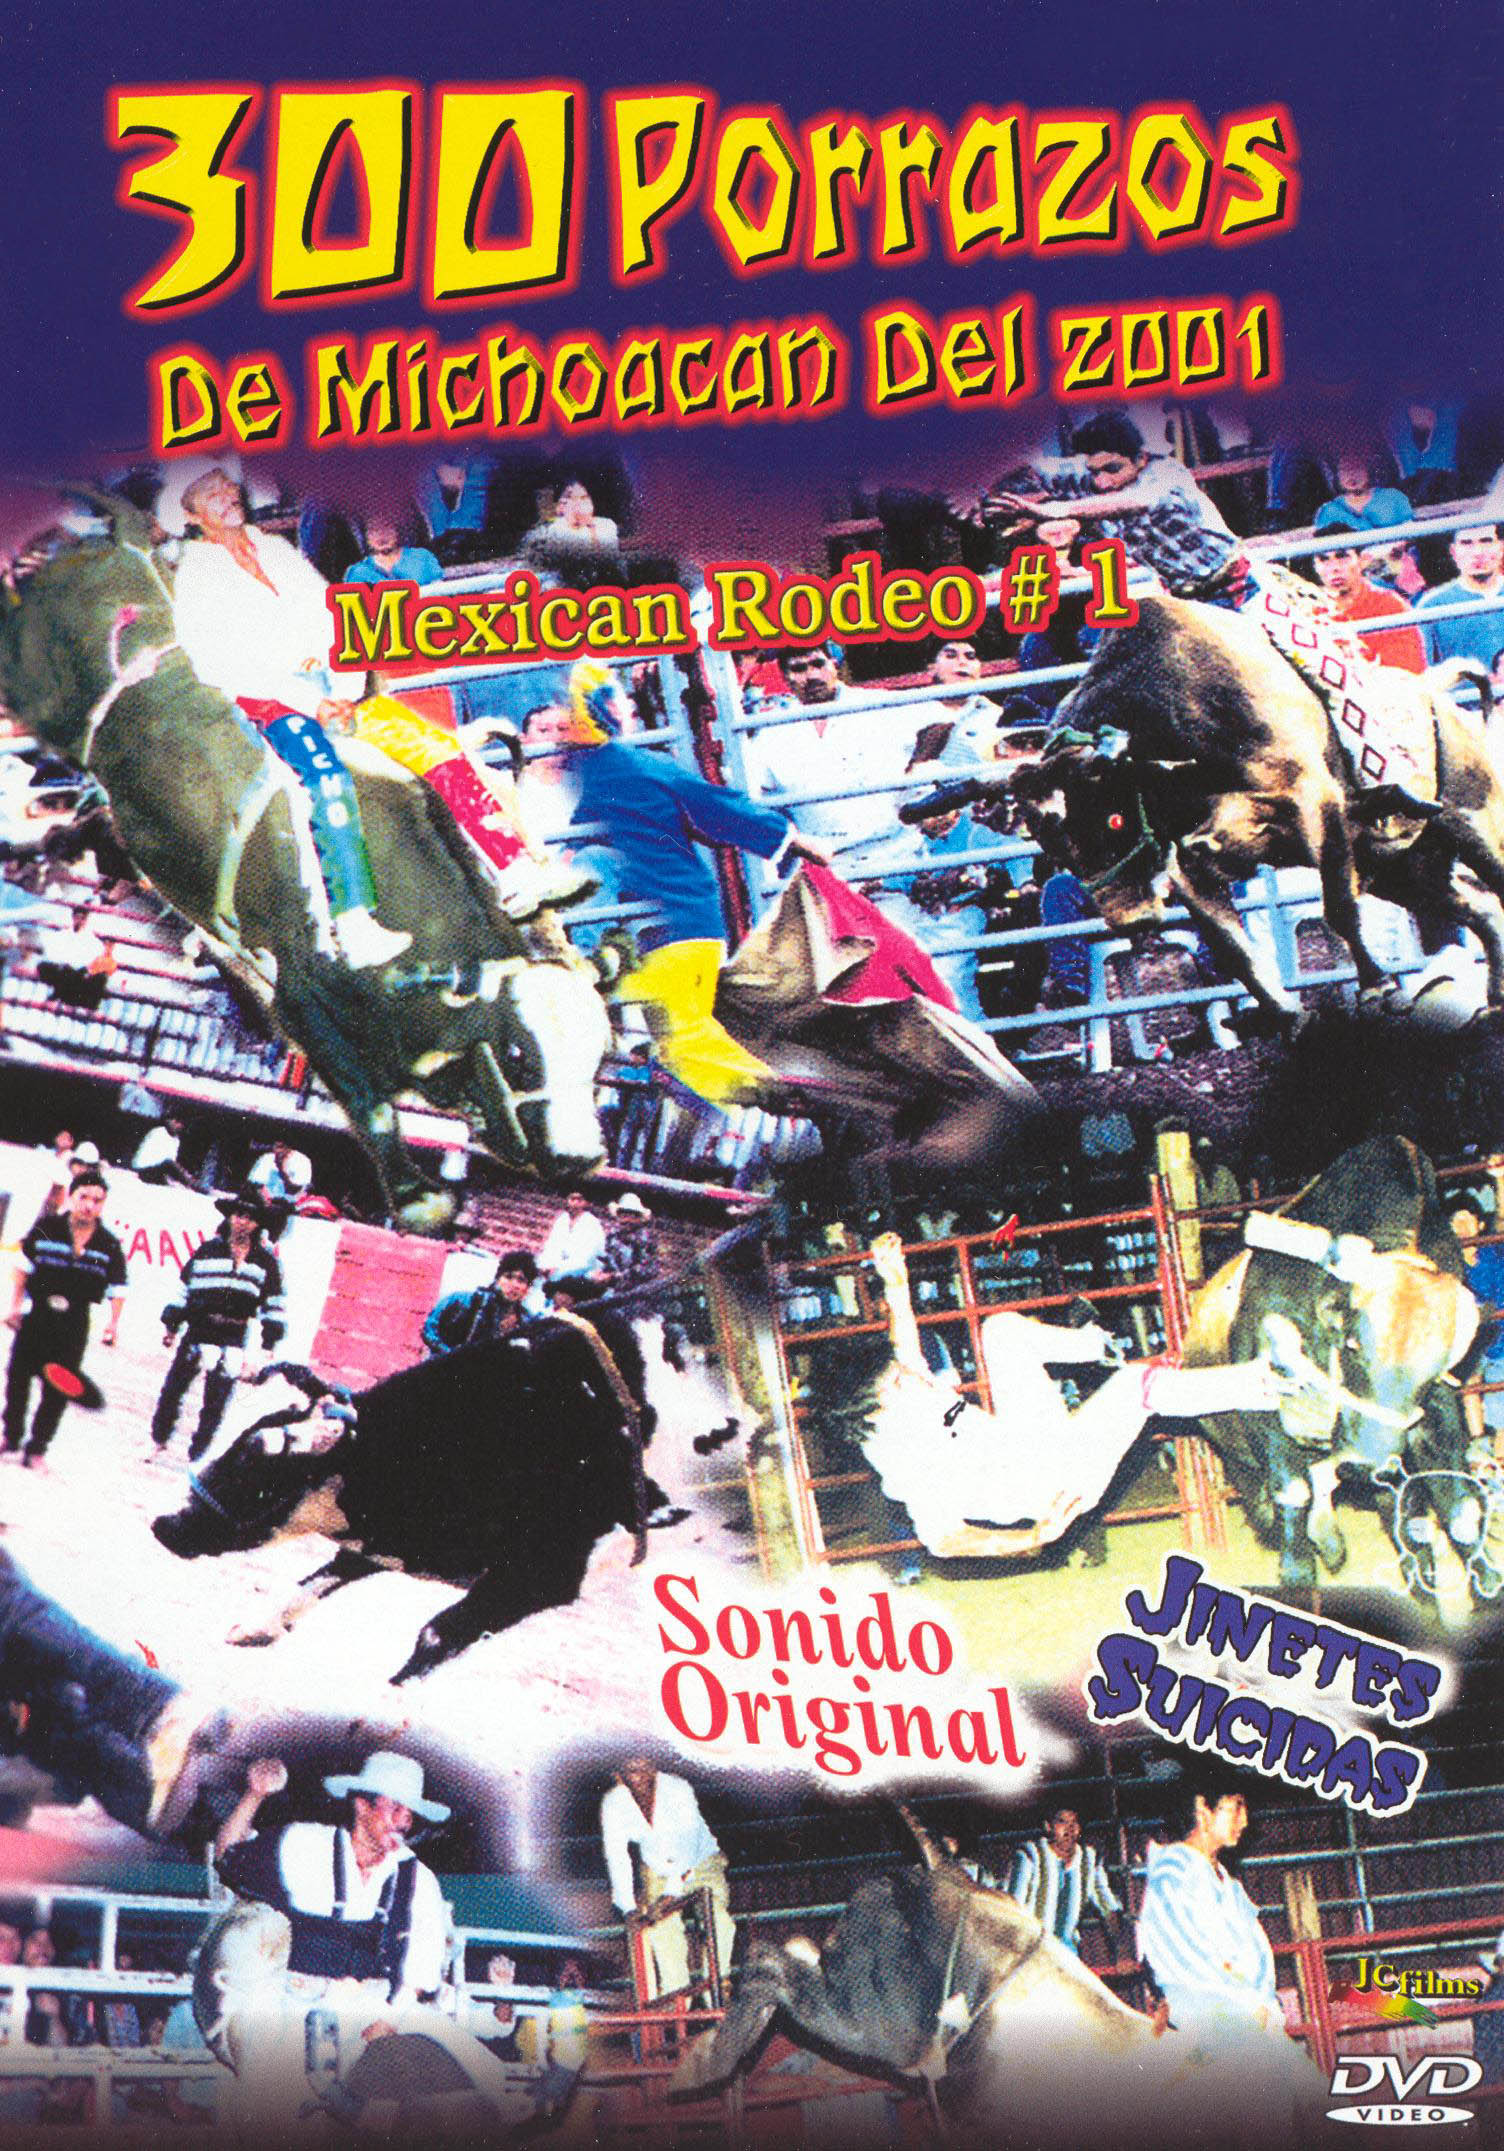 Best Buy: 300 Porrazos de Michoacan del 2001 [DVD] [2001]